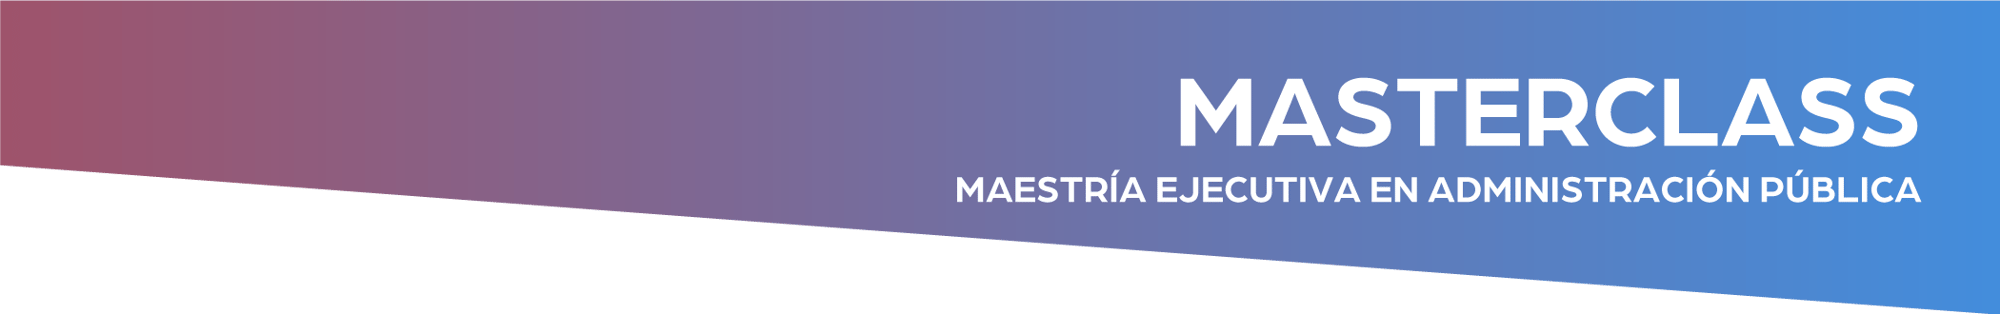 Masterclass-MLP-Enero-24-Header